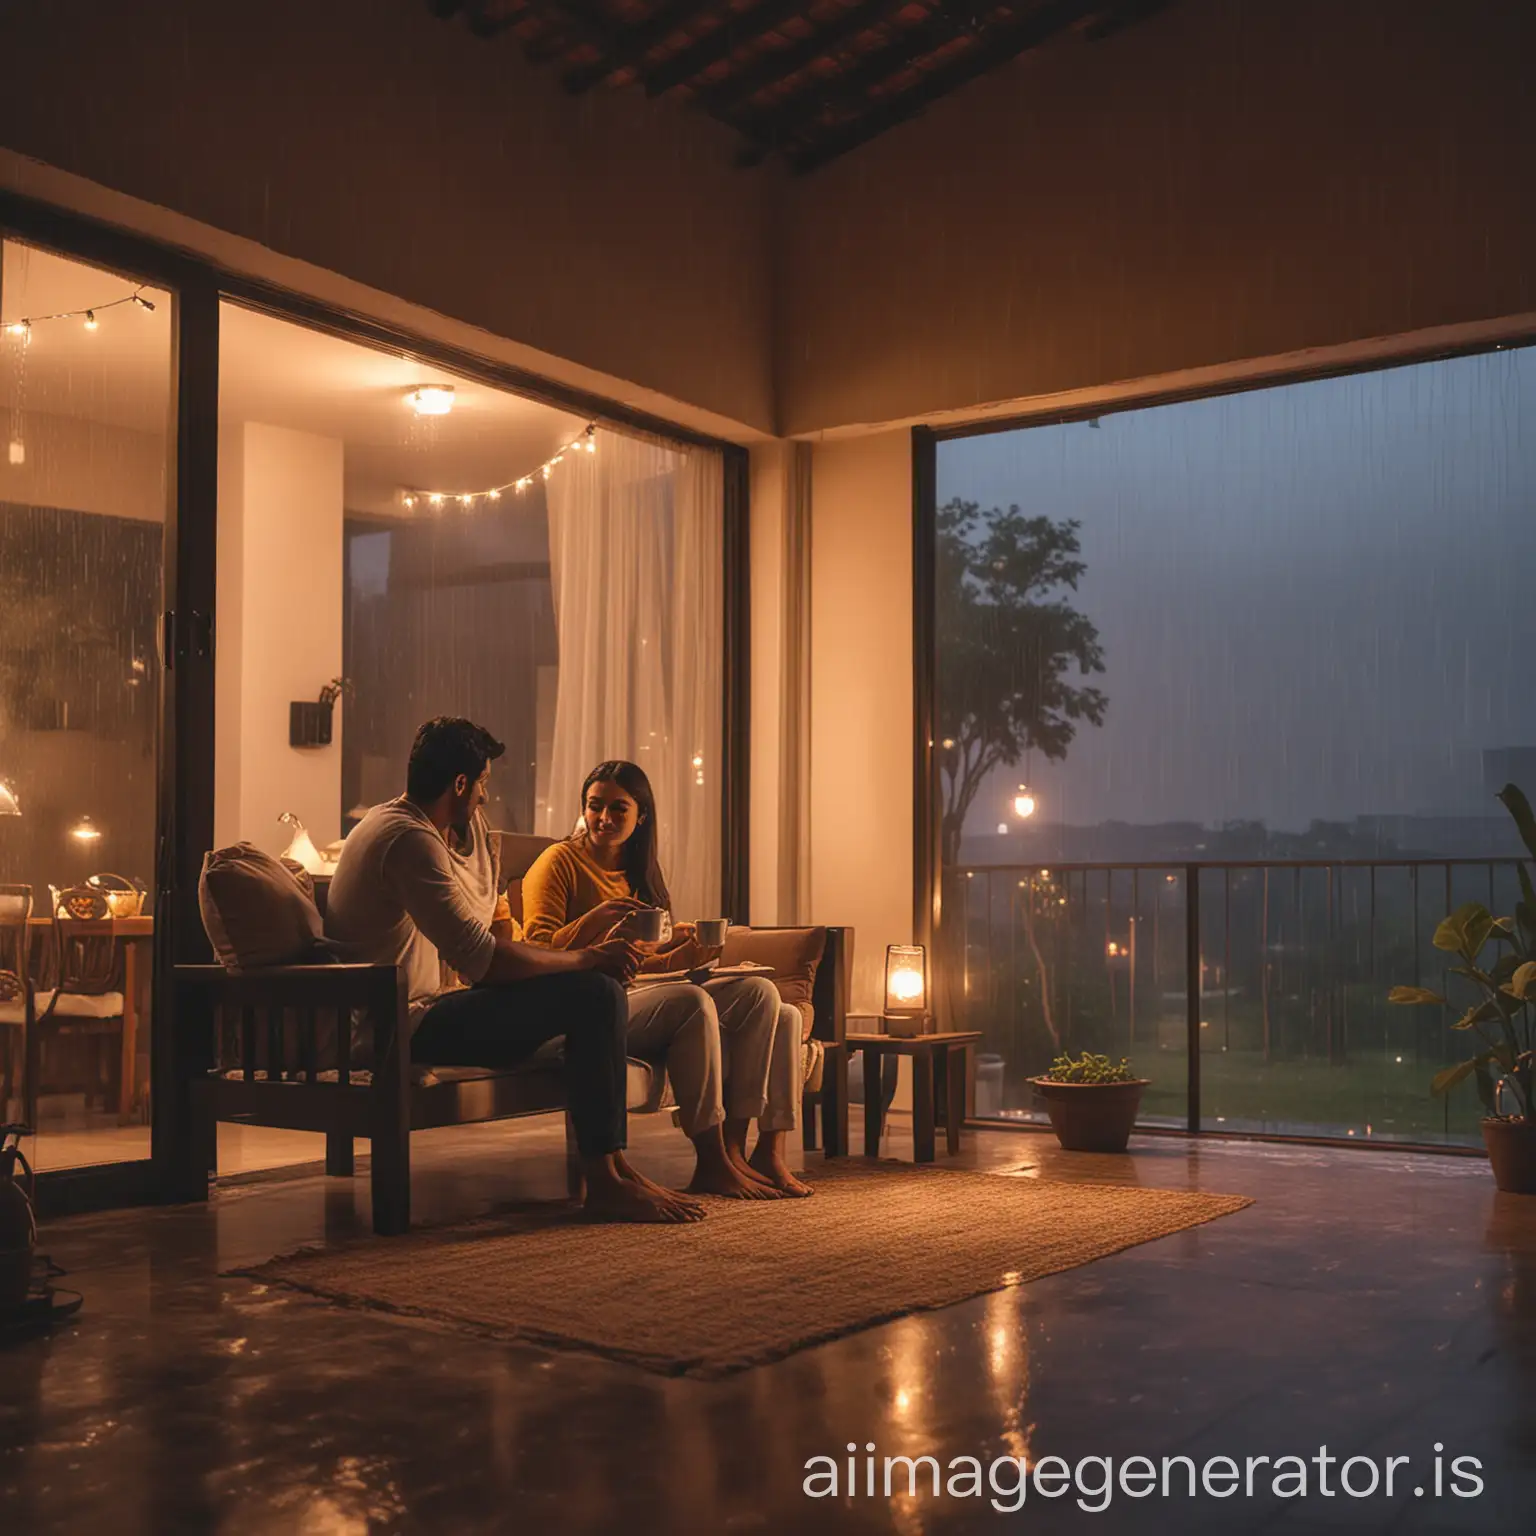 Romantic-Indian-Couple-Enjoying-Hot-Tea-in-Cozy-Villa-During-Rainy-Evening